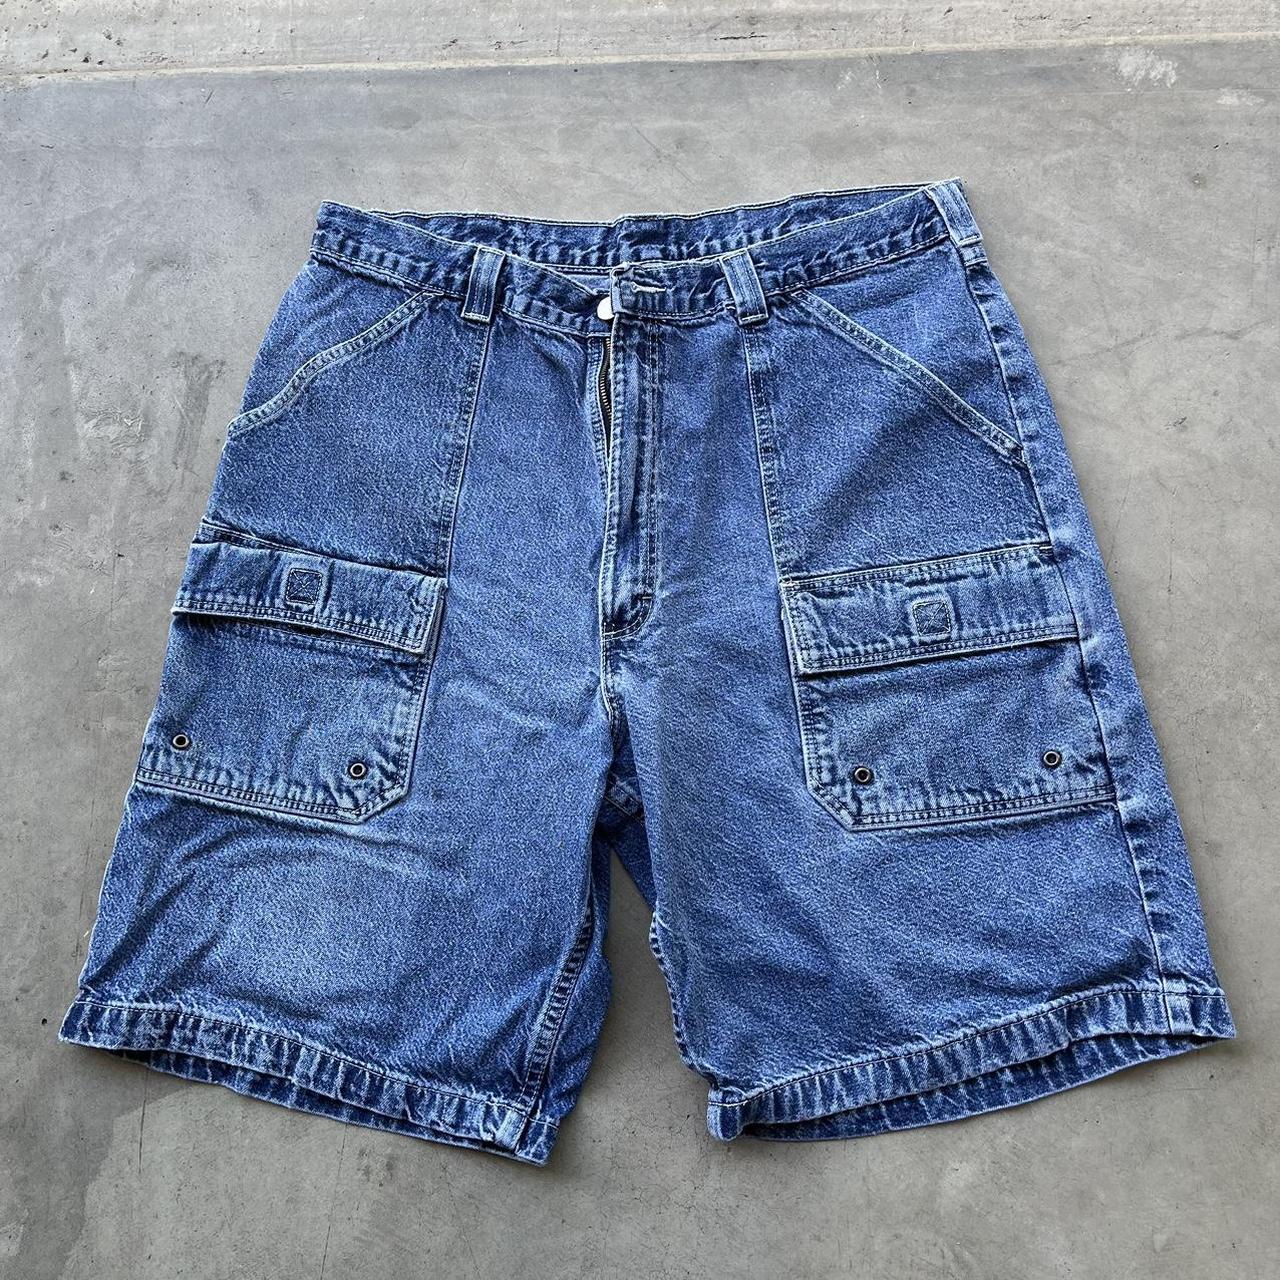 wrg jean cargo shorts wrangler blue wash distressed... - Depop